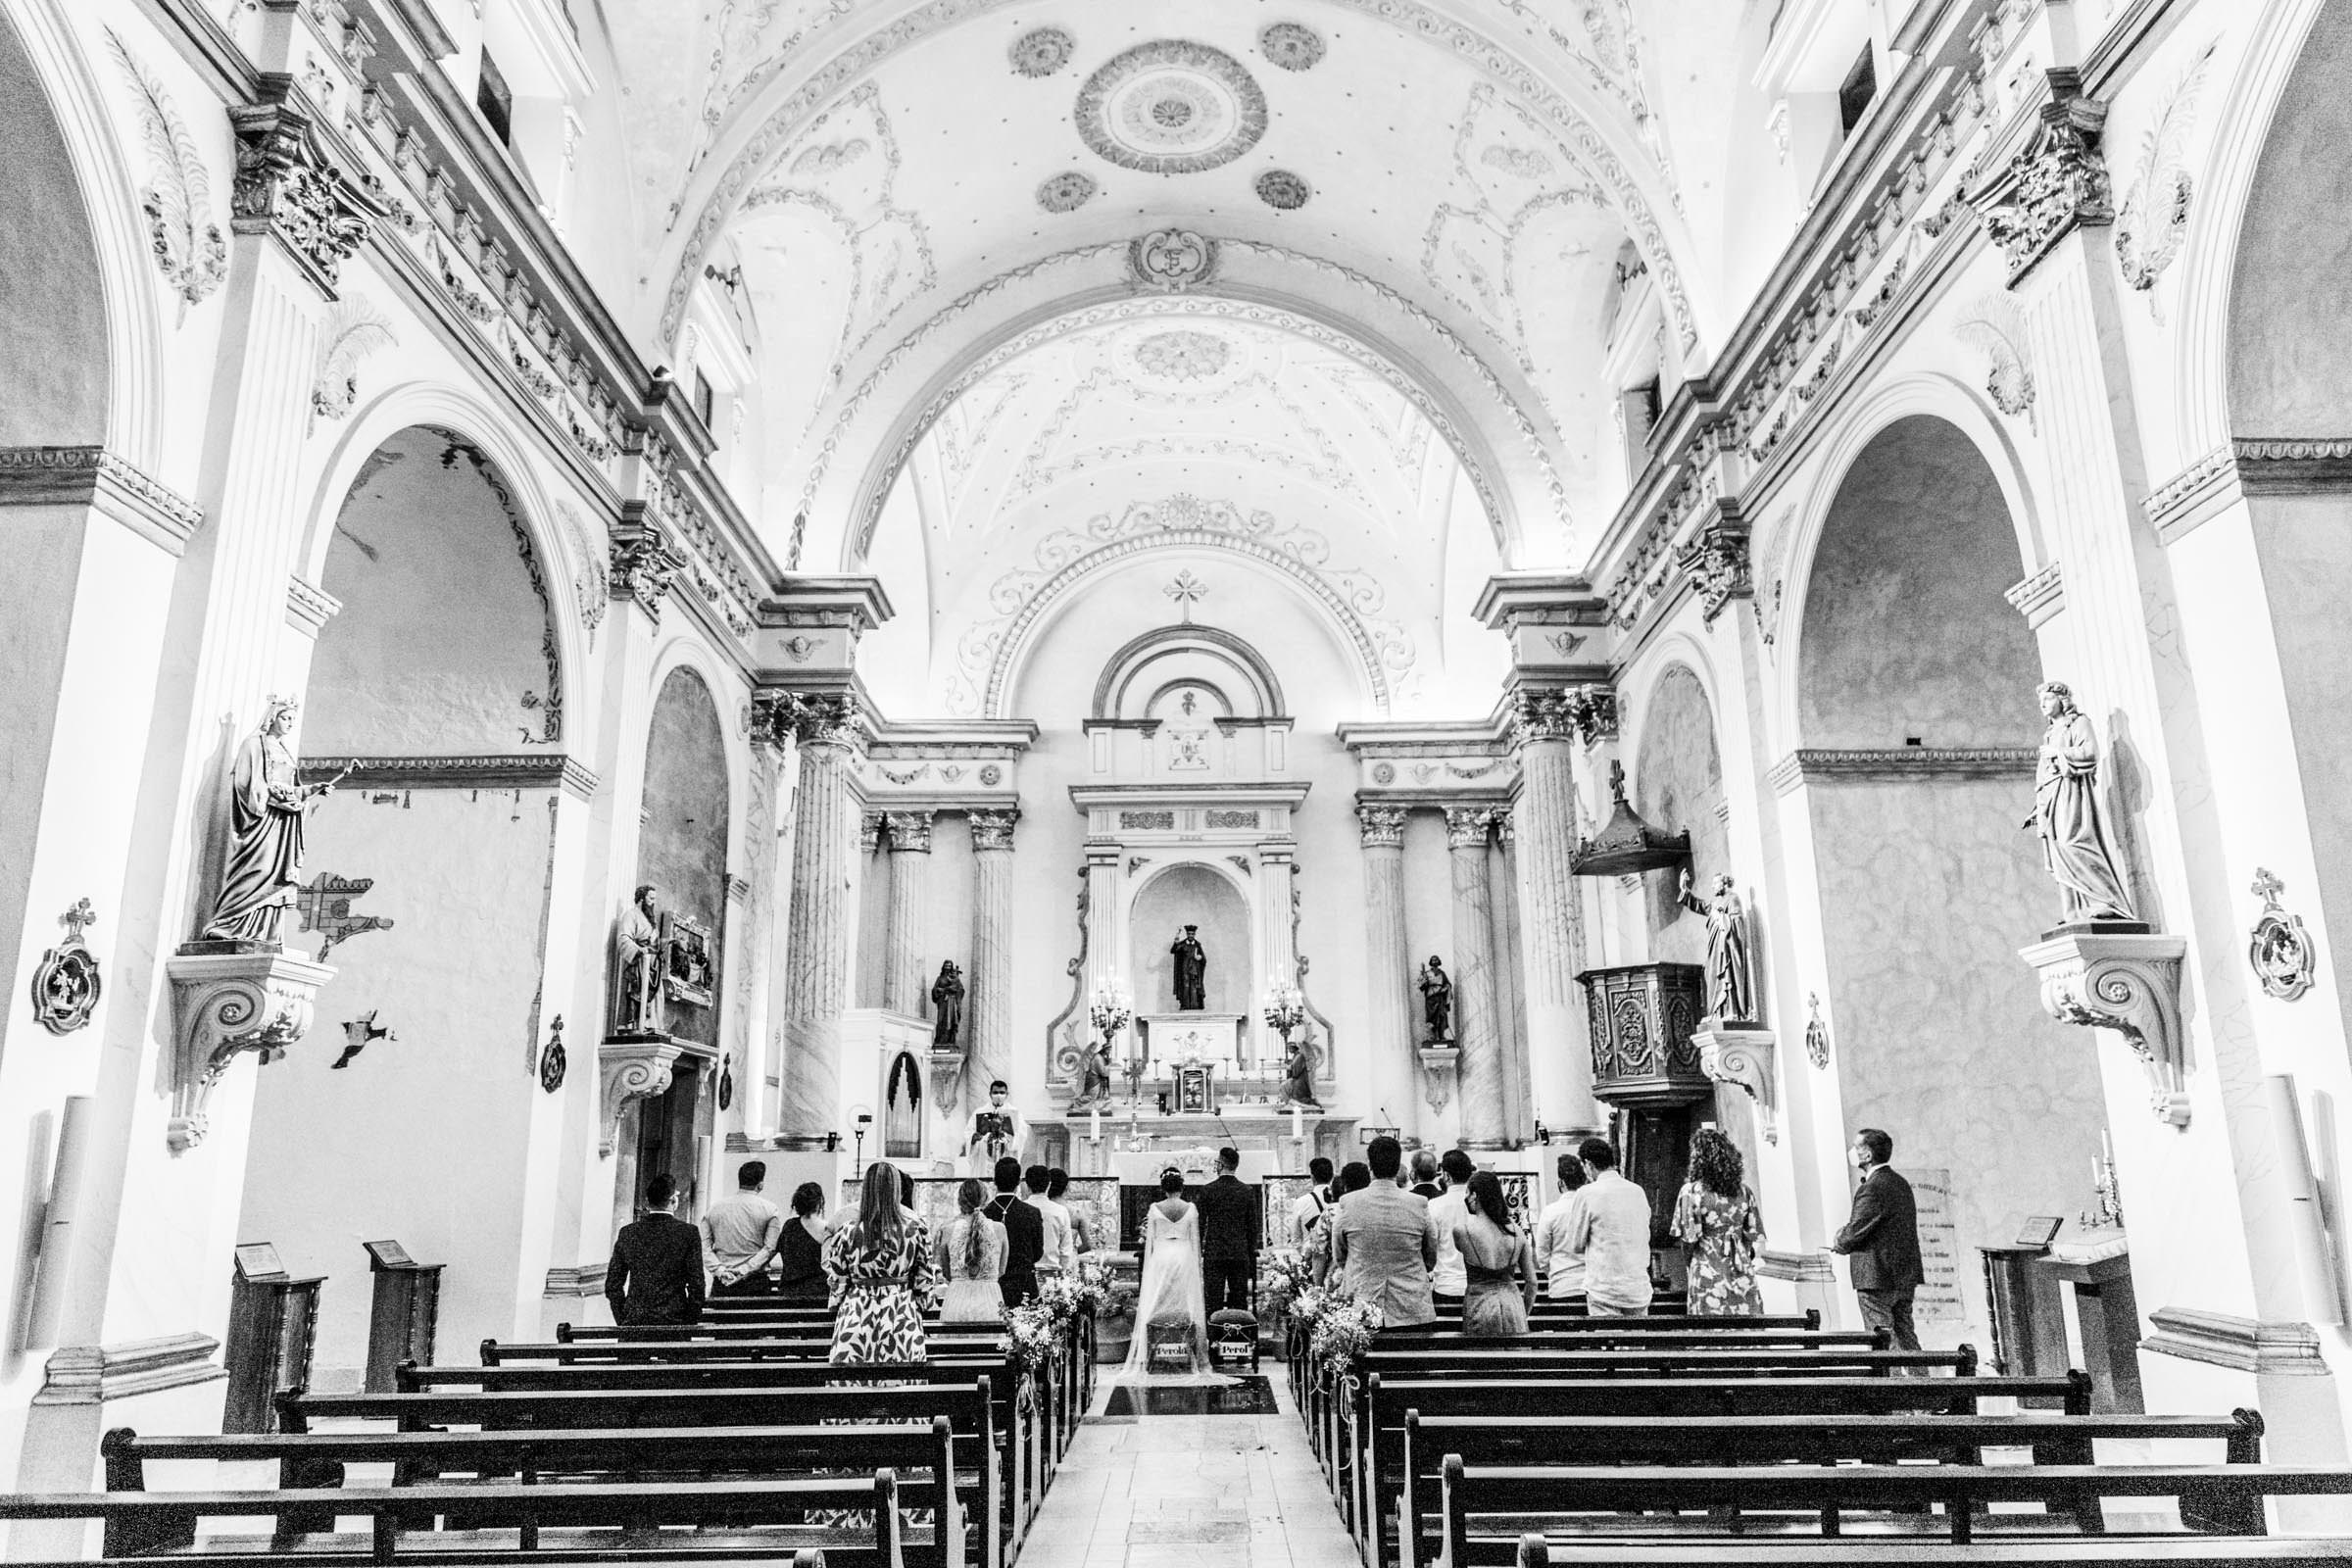 Oratorio San Felipe de Neri, Av. B con Calle 4a Este - Casco Viejo, Ciudad de Panamá